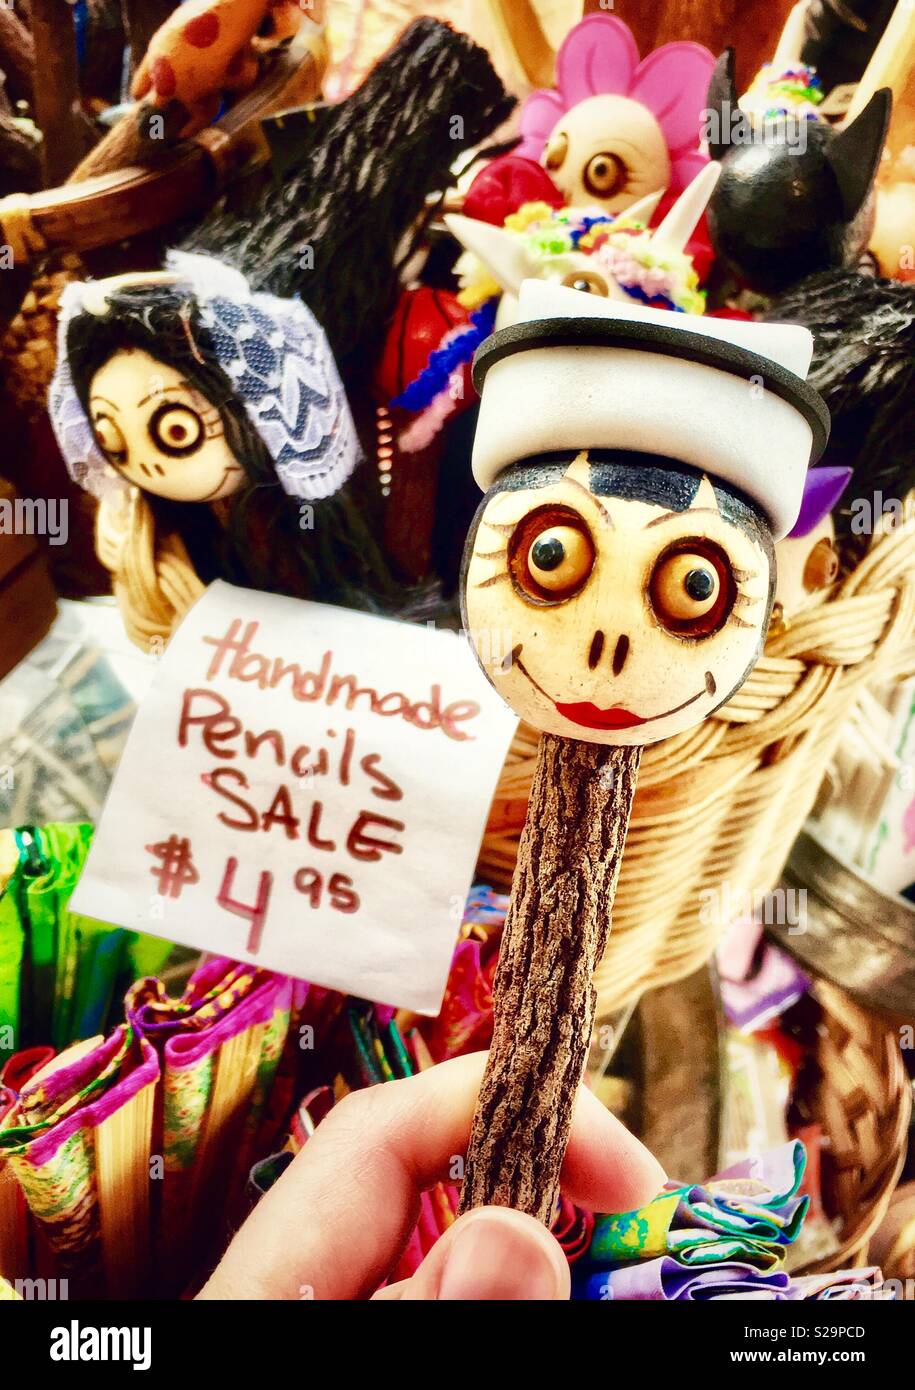 Creepy handmade pencils for sale Stock Photo